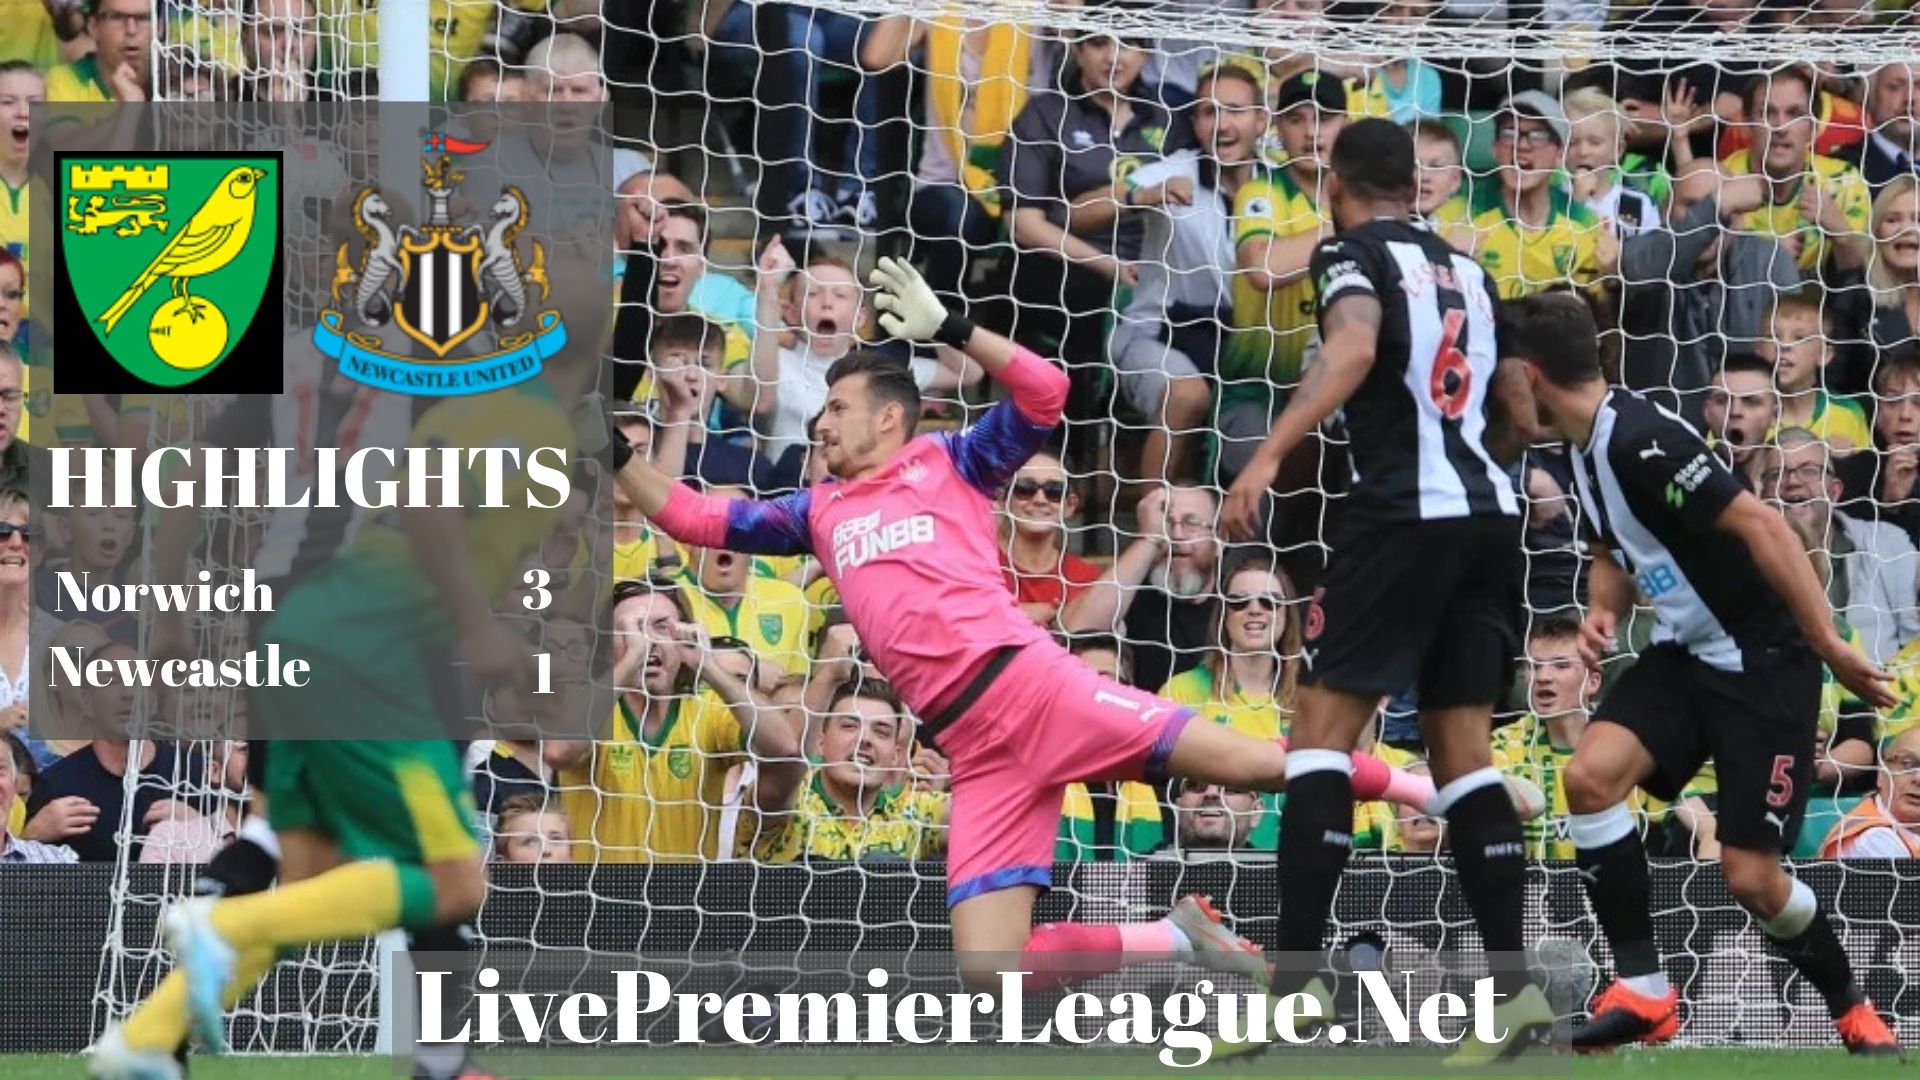 Norwich Vs Newcastle 2019 Premier League Highlights